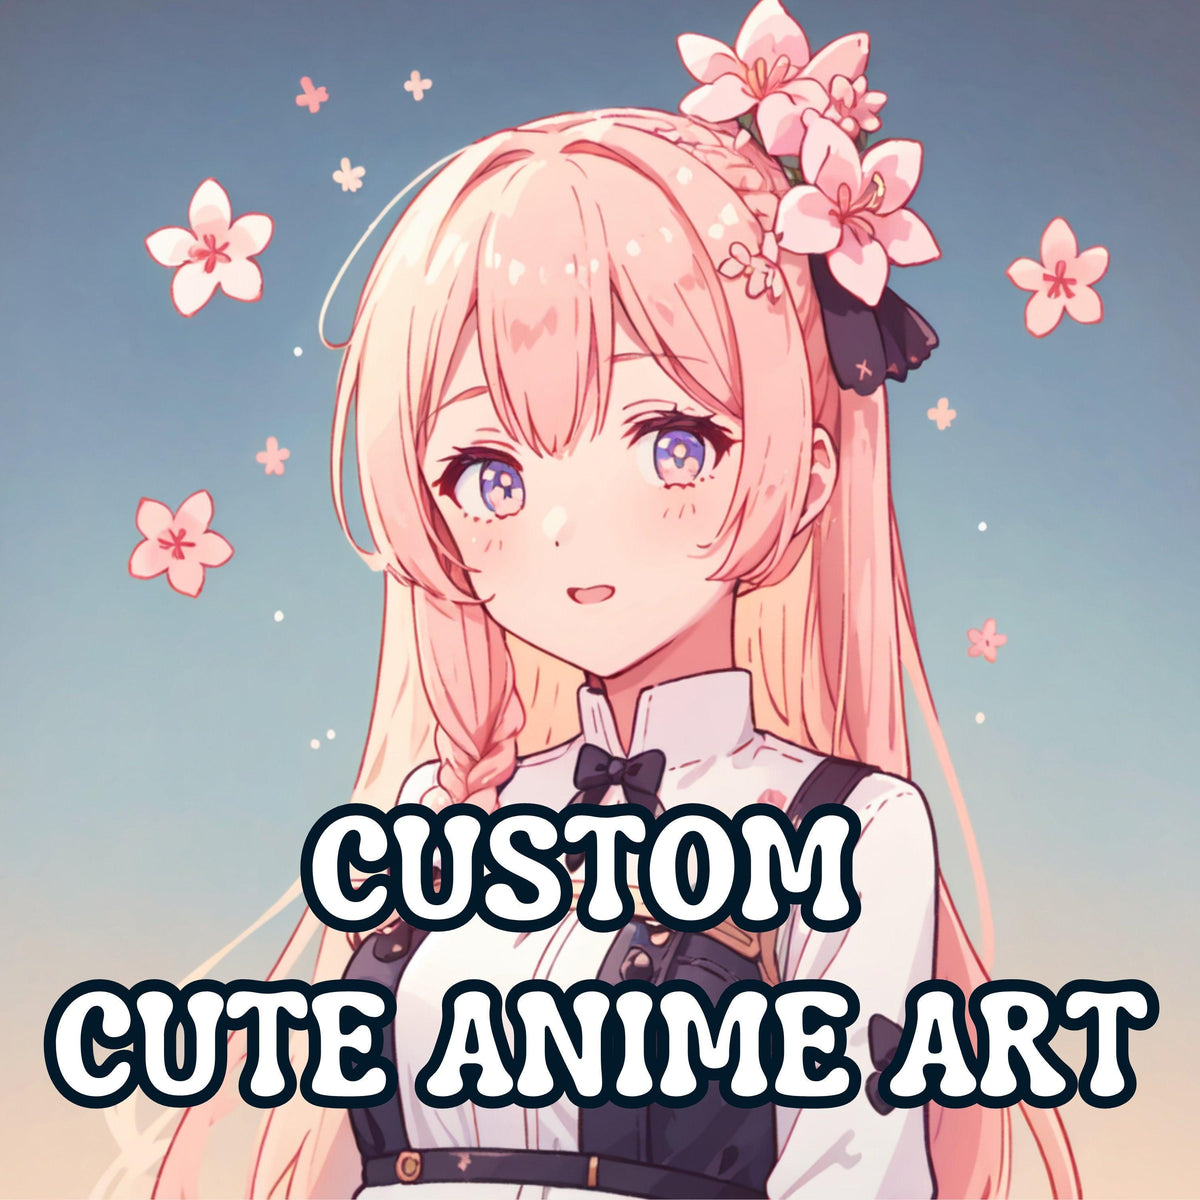 Custom Anime Art - Adorable and Cute Anime Style Art Illustration Commission - Cozy Brushery